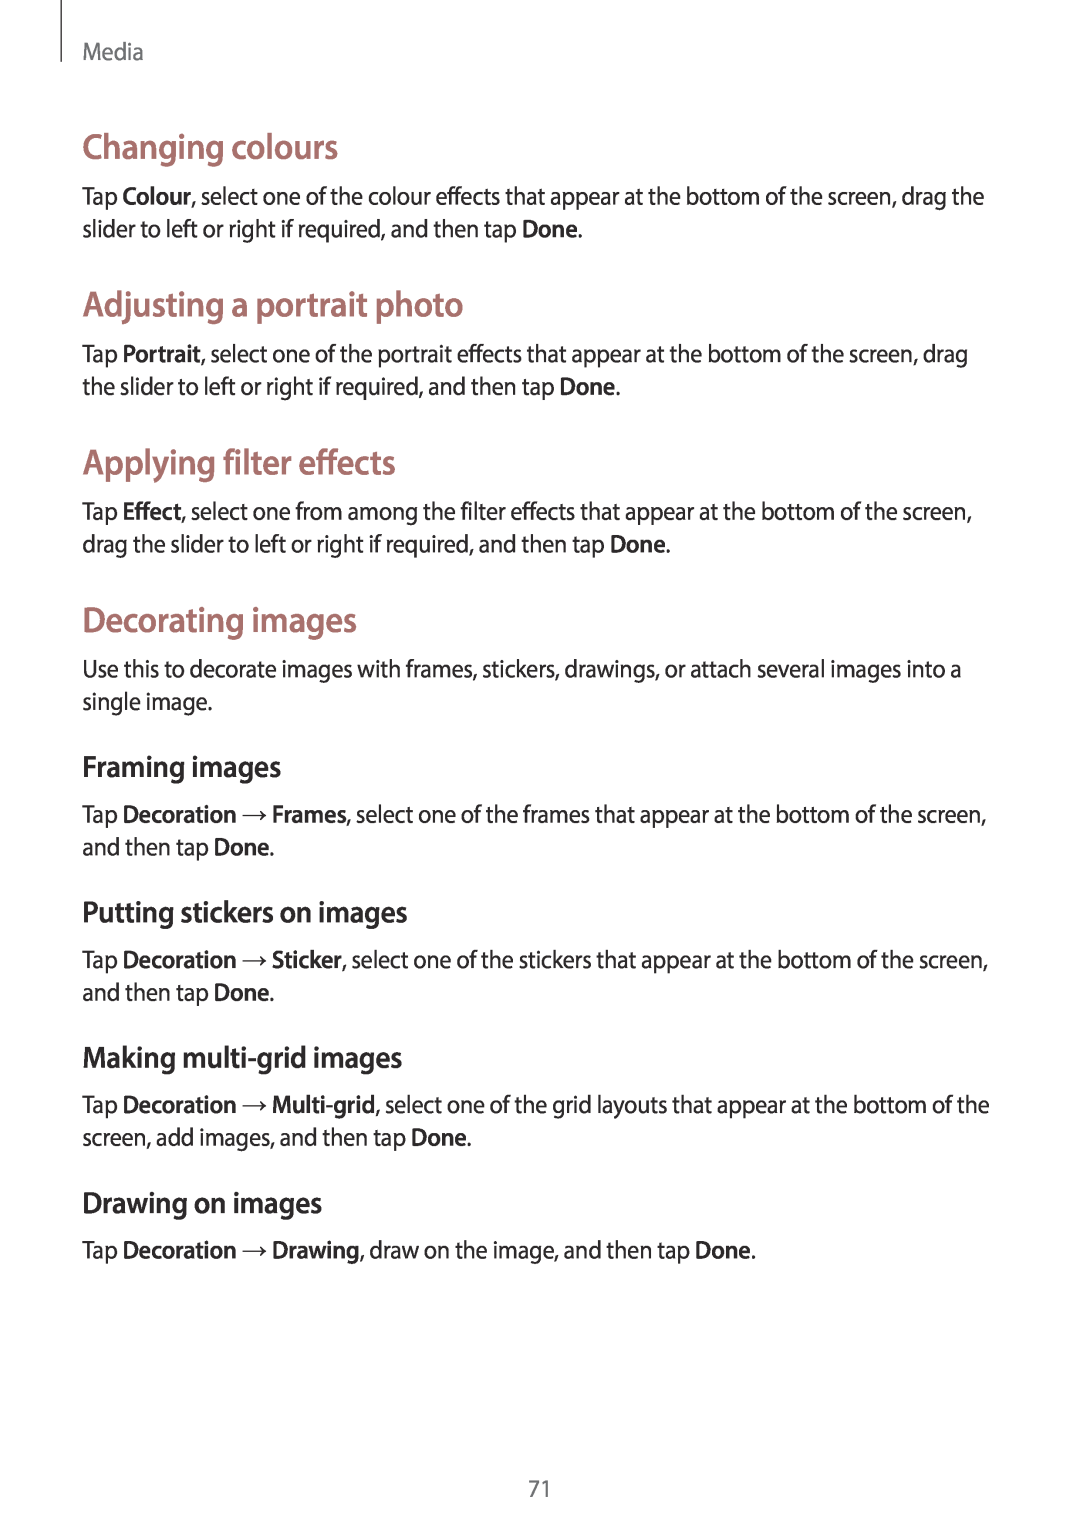 Samsung EK-GC100 Changing colours, Adjusting a portrait photo, Applying filter effects, Decorating images, Framing images 